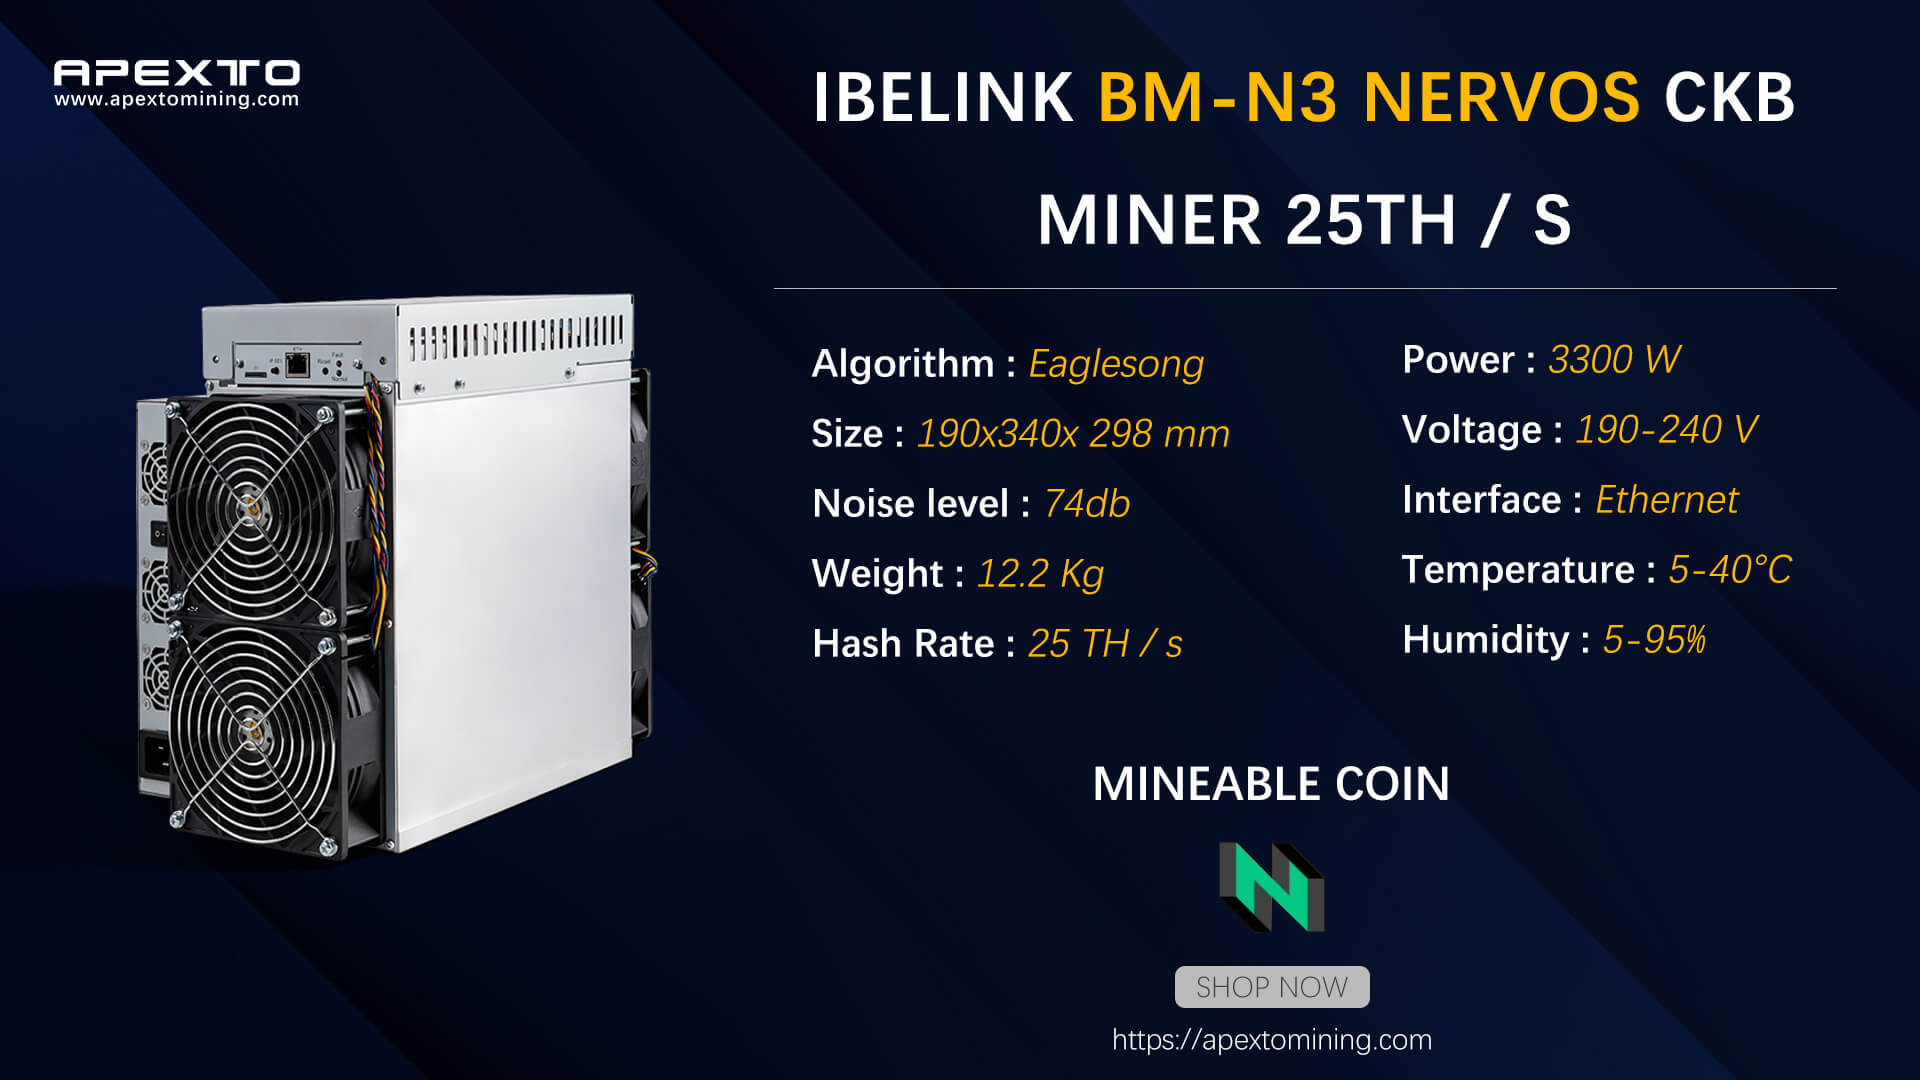 Déi nei Arrivée iBelink CKB Miner: BM -N3